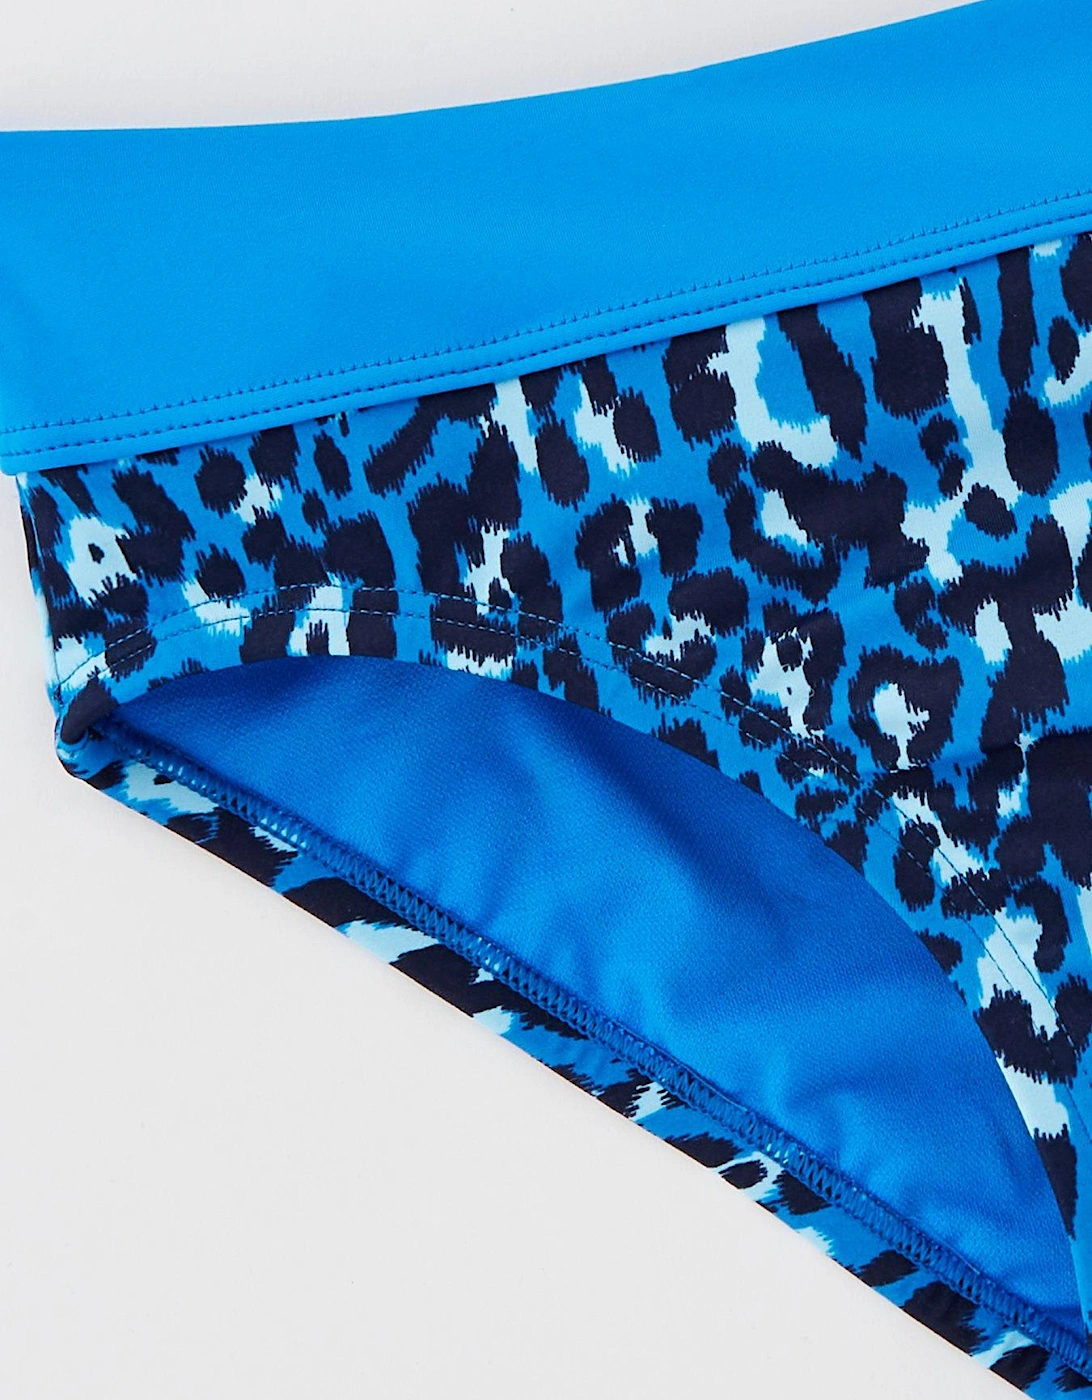 Wild Girl's Asymmetrical Top & Bikini Set-blue